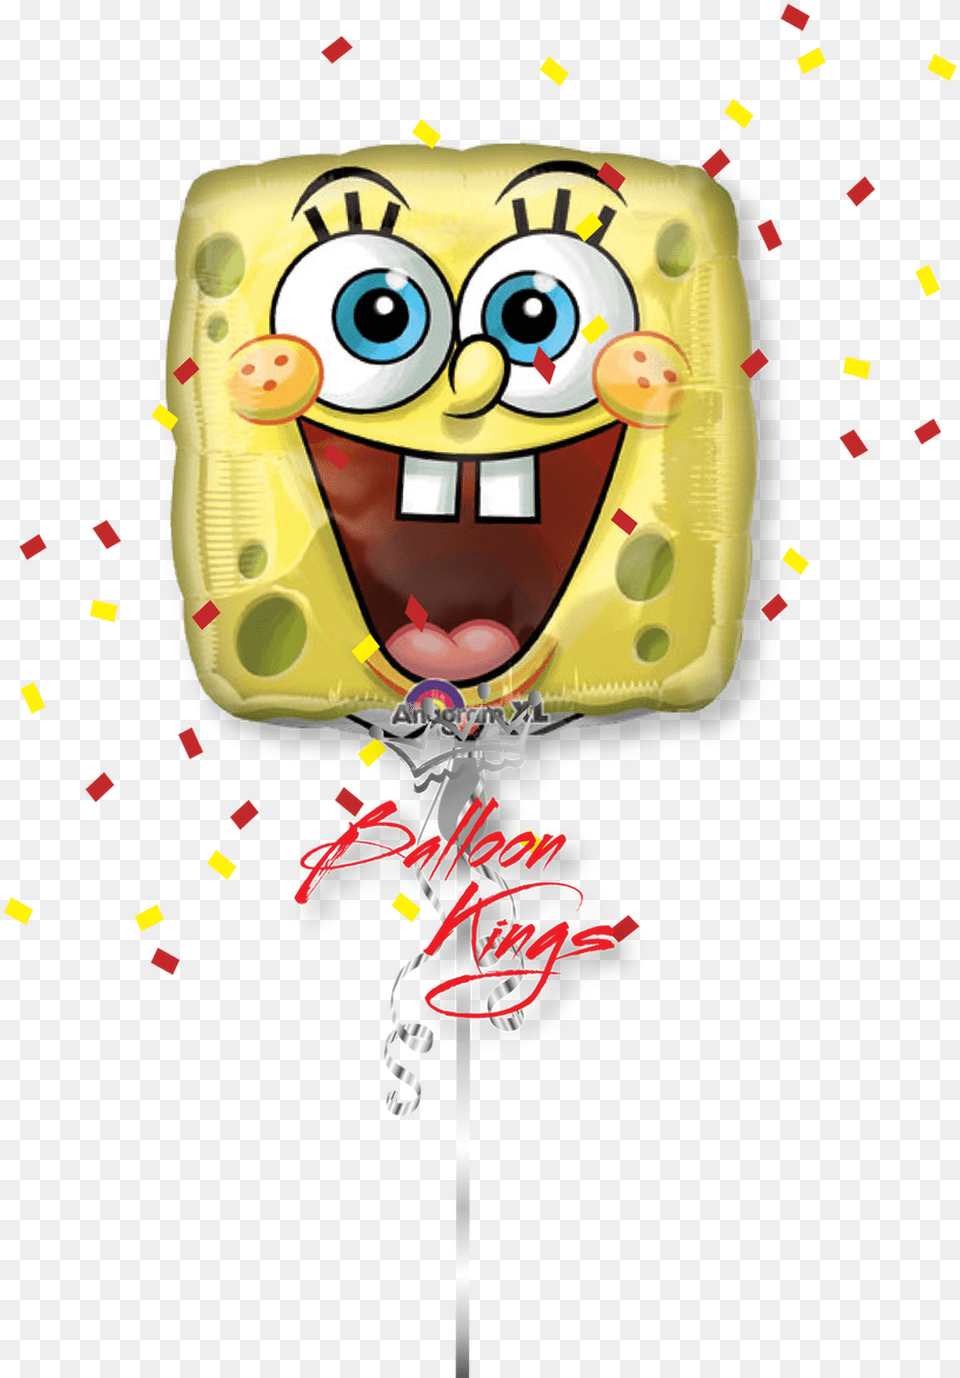 Spongebob Square Face Spongebob, Food, Sweets, Toy, Candy Free Transparent Png